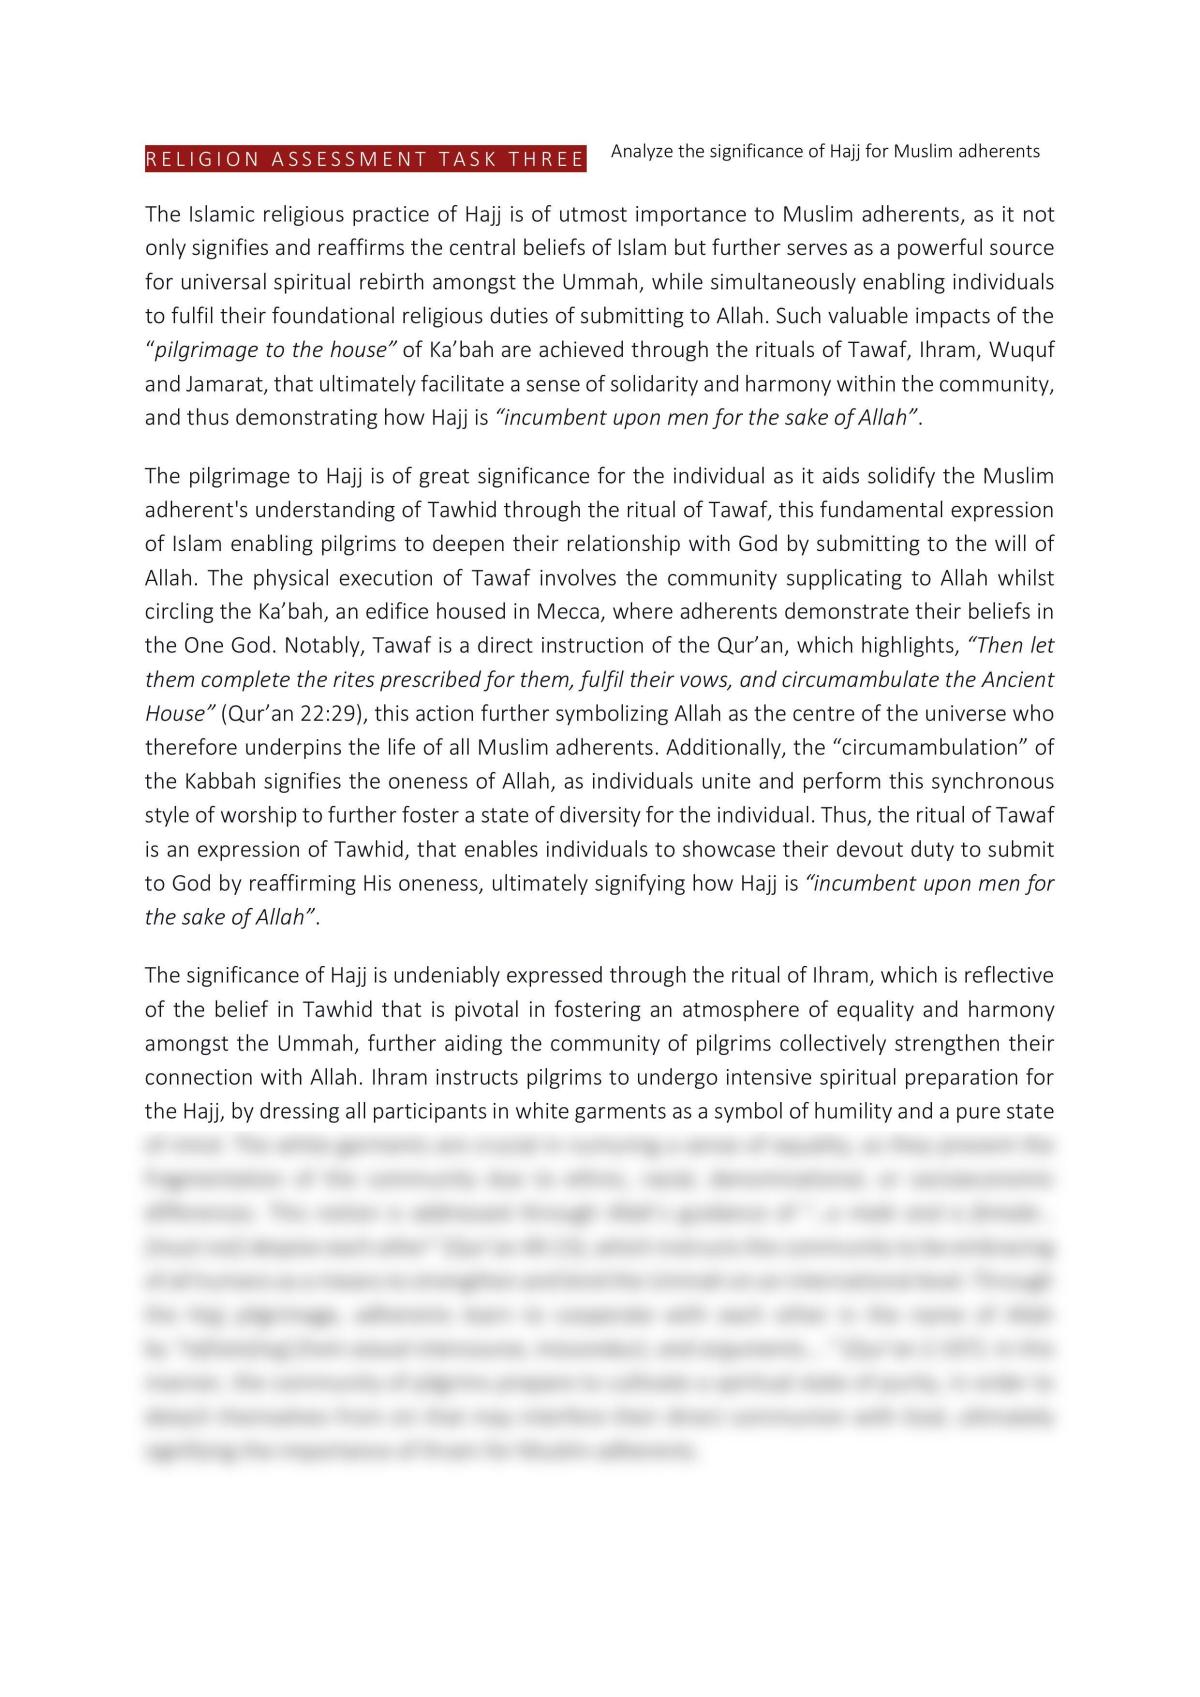 studies of religion hajj essay